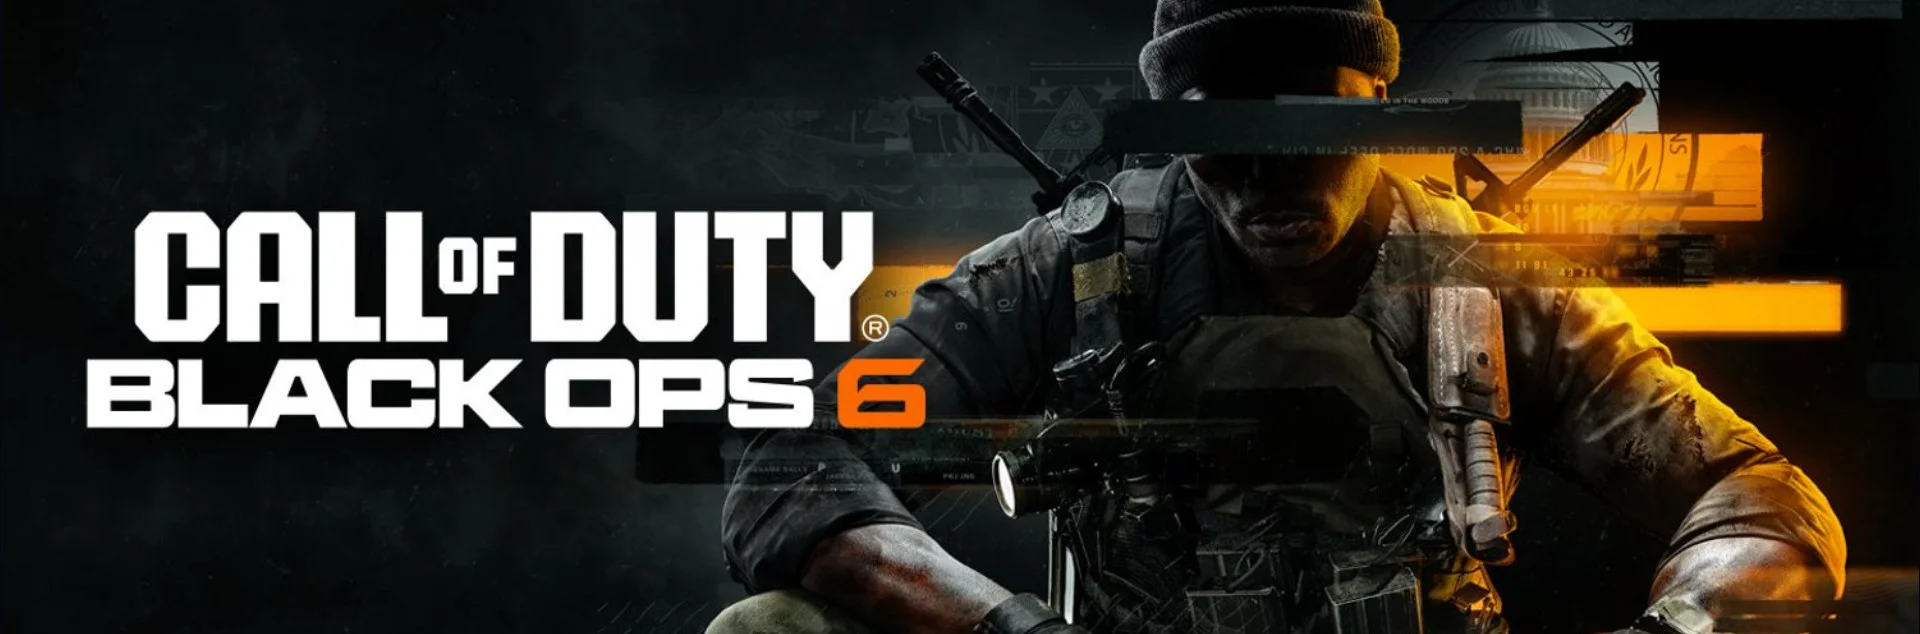 Activision анонсировала Call of Duty Black Ops 6 студий Treyarch и Raven - фото 2